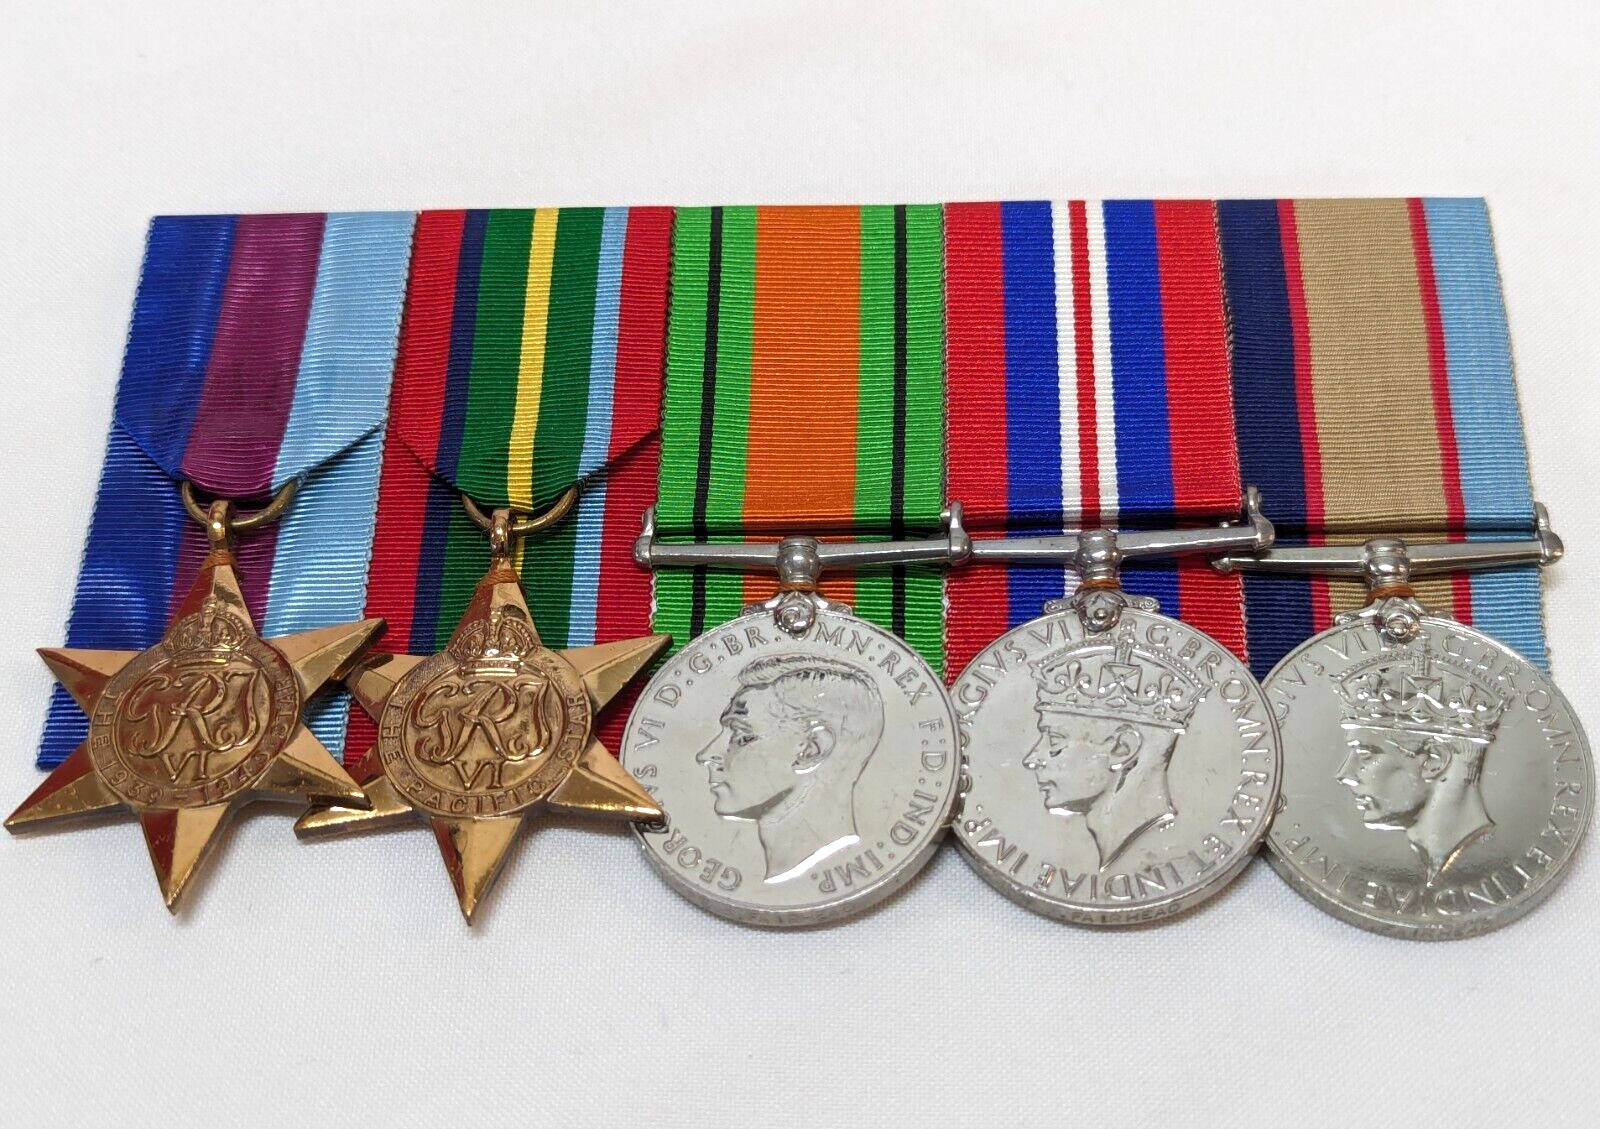 WW2 Royal Australian Air Force service medals Warrant Officer Jack Fairhead